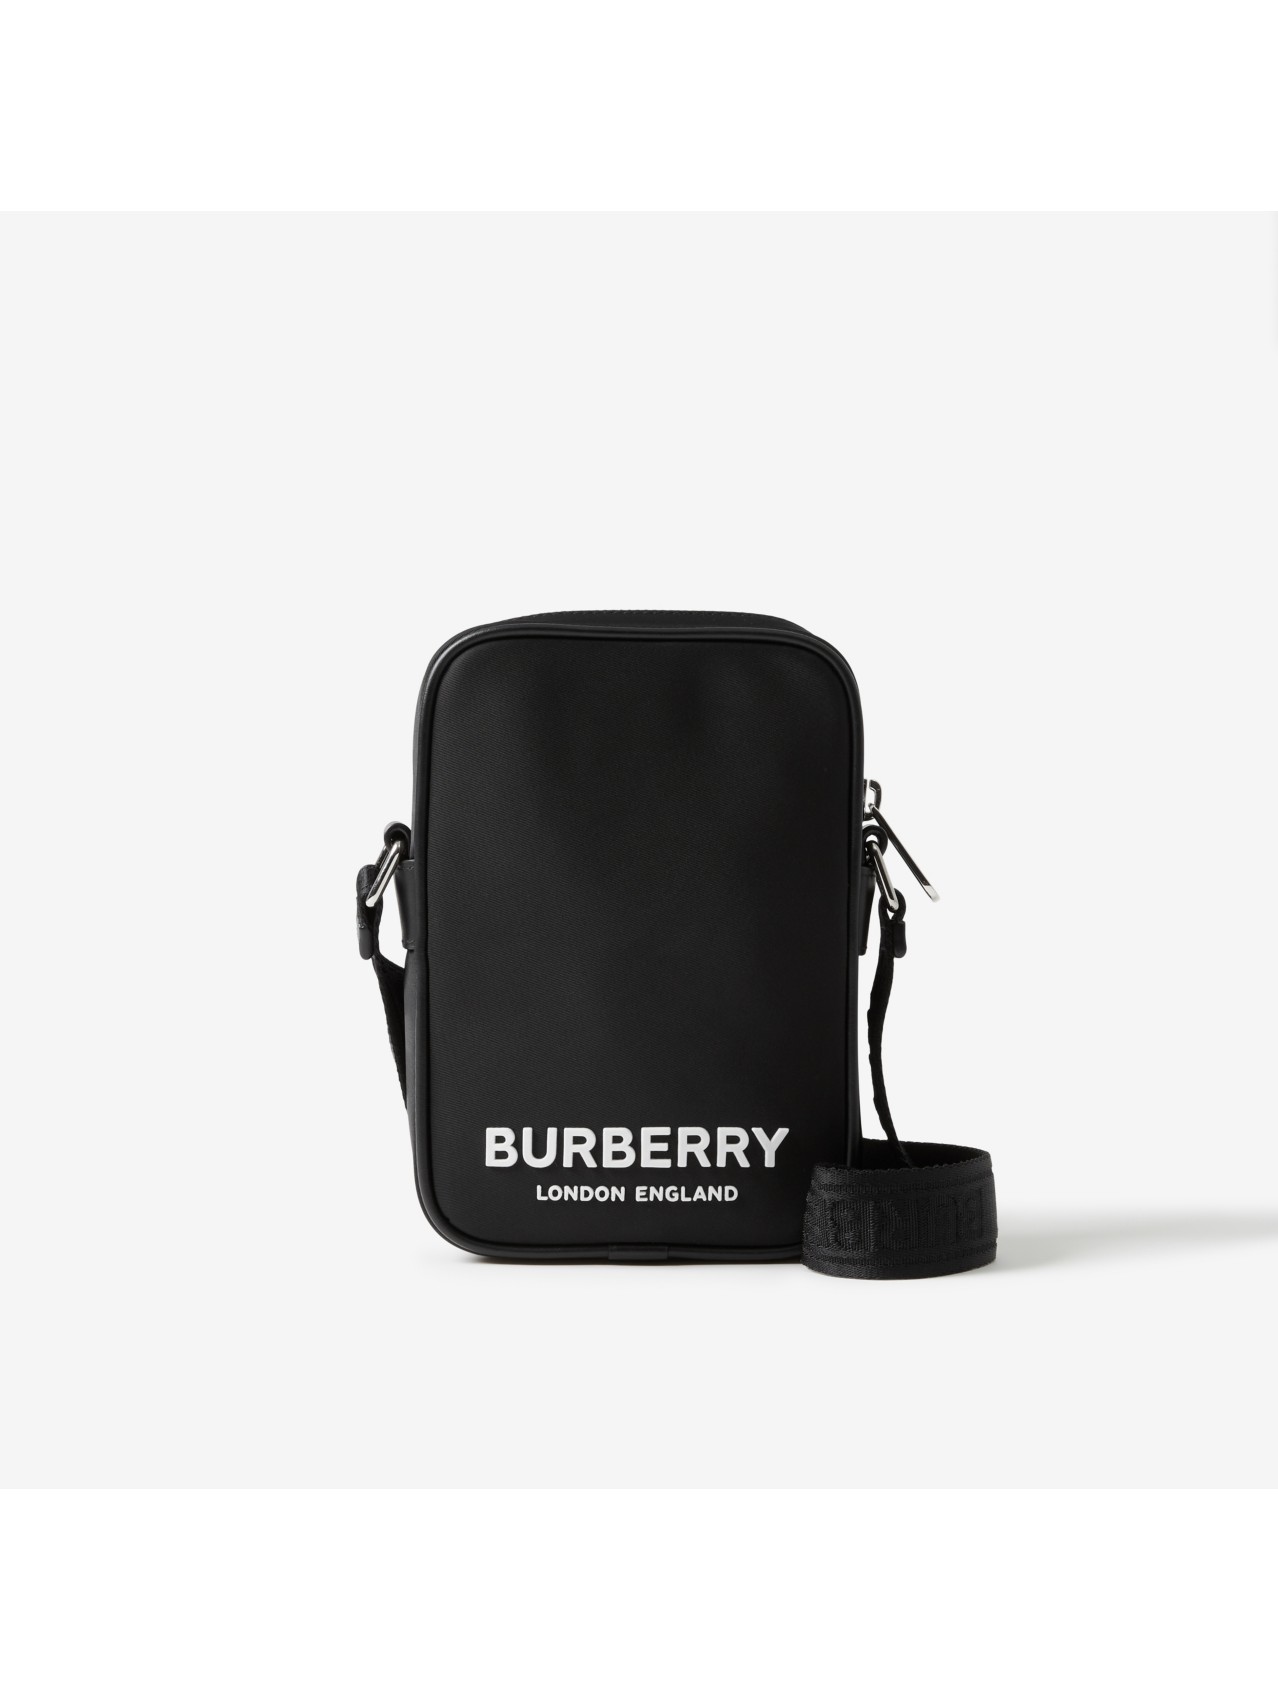 Designer Small Bags For Men | Burberry® Official